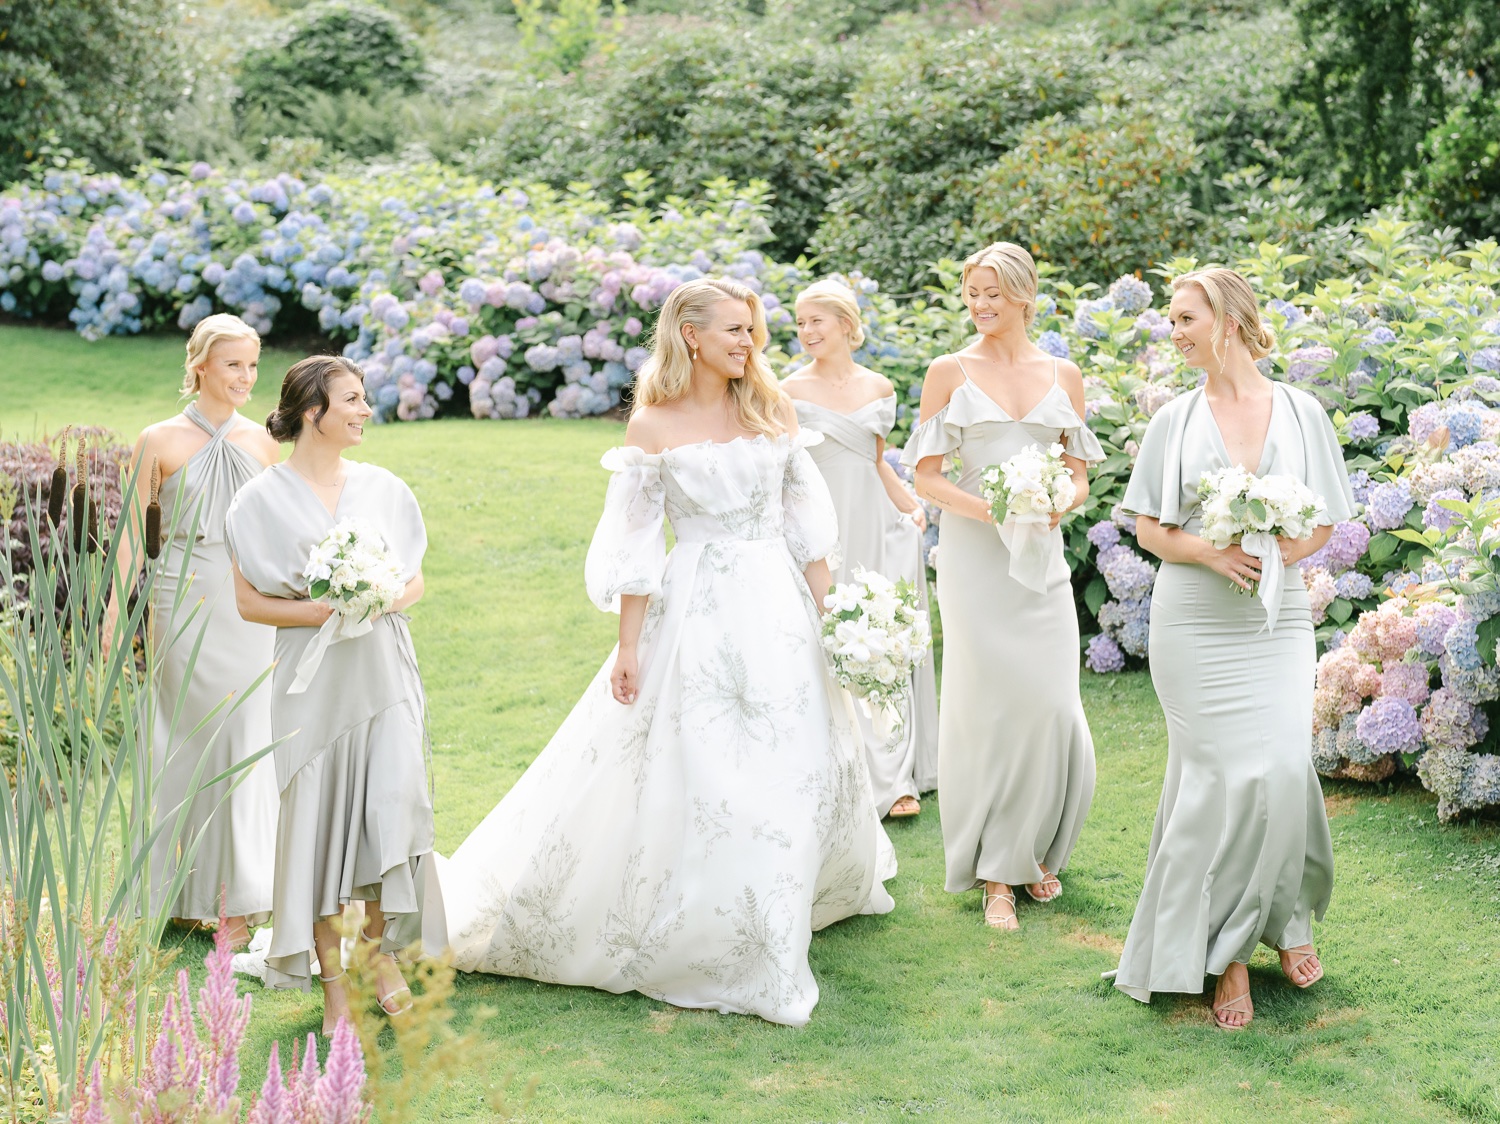 Wedding photographer Norrviken Gardens